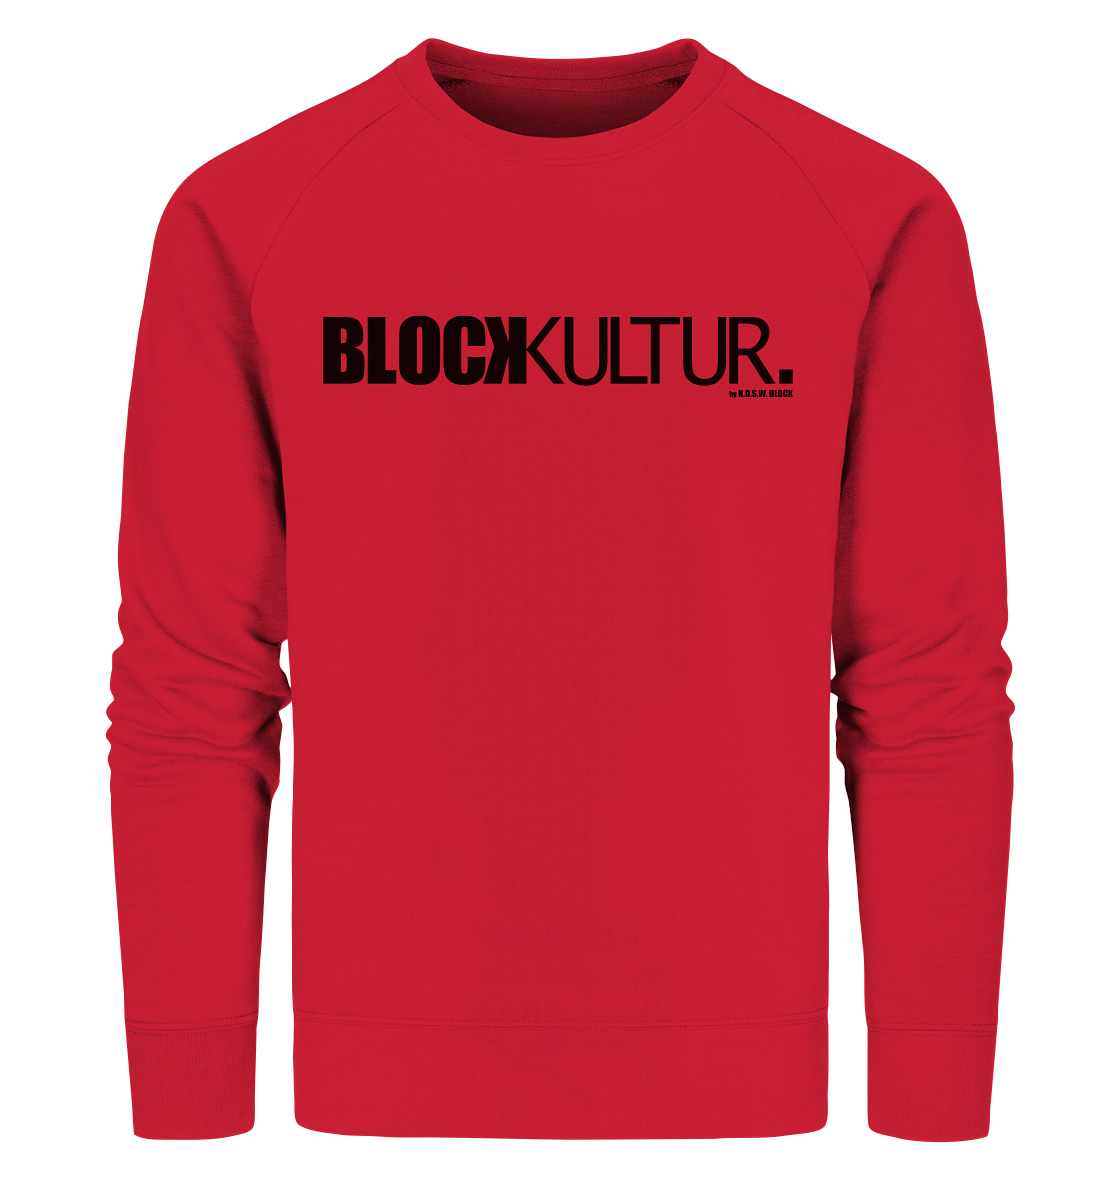 N.O.S.W. BLOCK Fanblock Sweater "BLOCK KULTUR." Männer Organic Sweatshirt rot